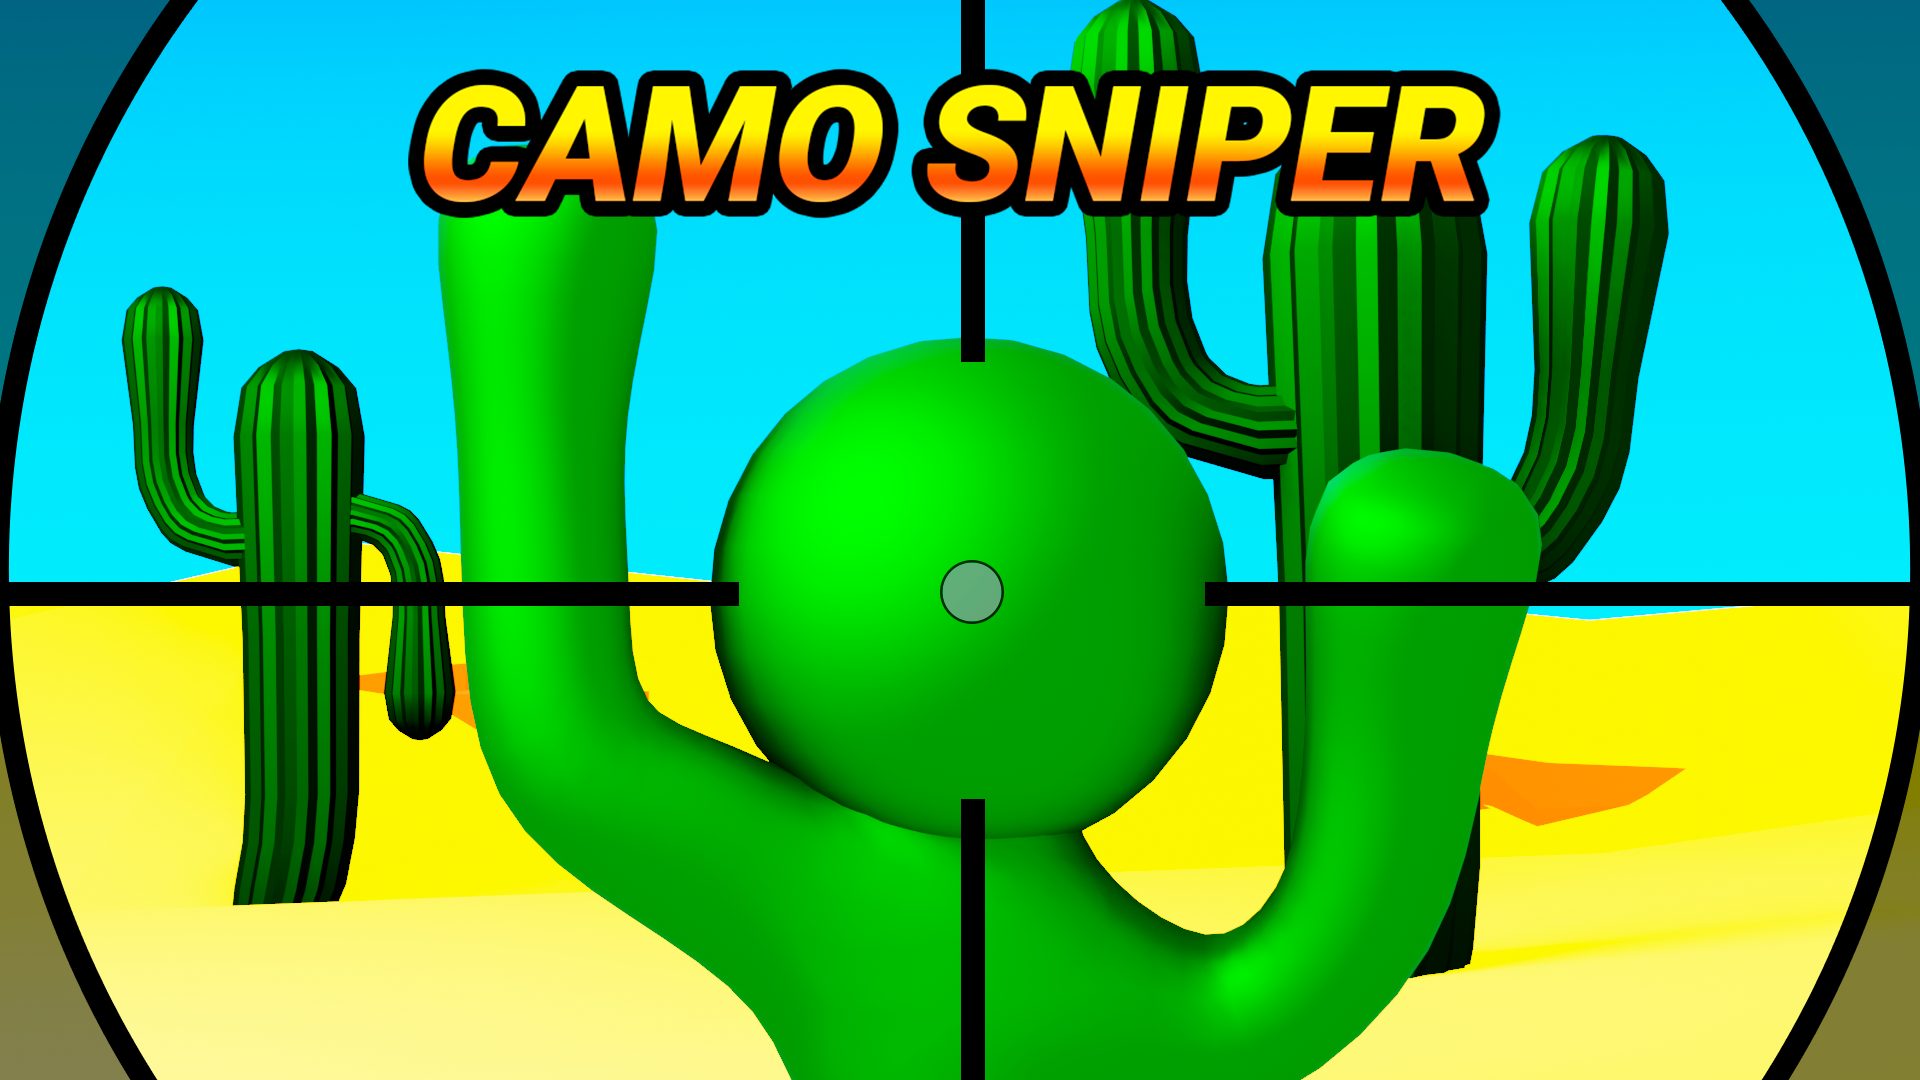 Camo Sniper 3D Game Image